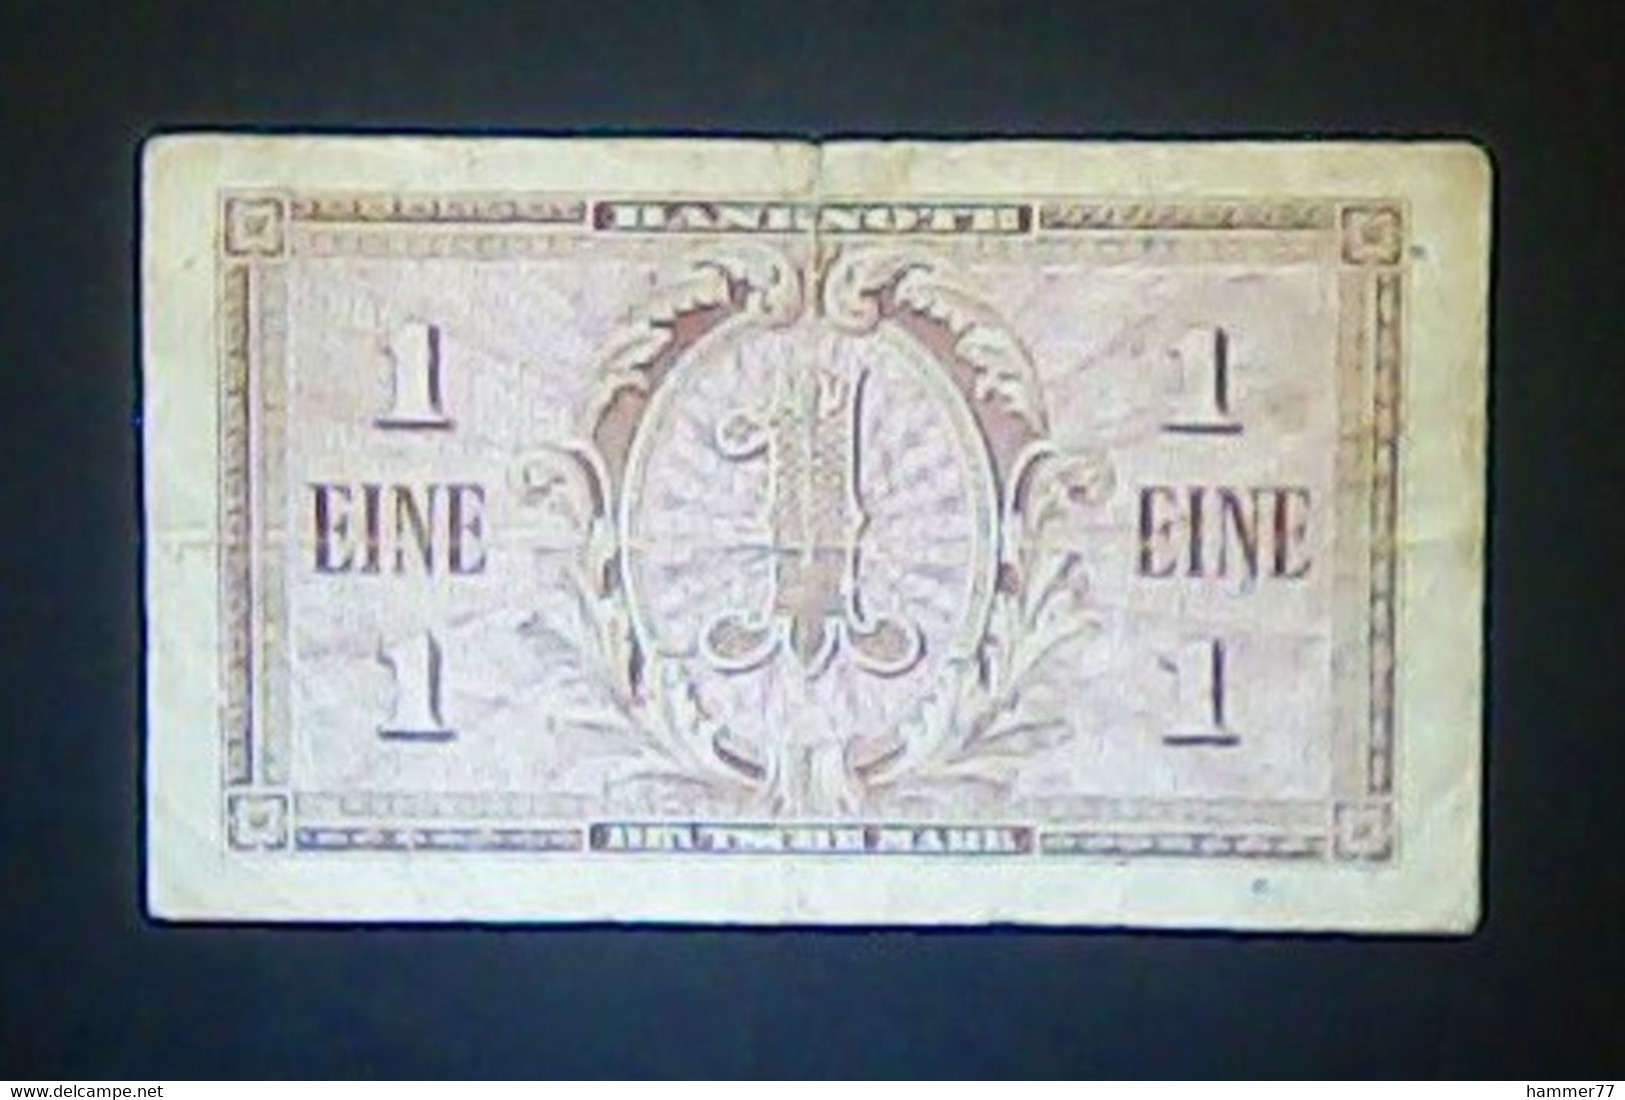 Germany 1948: 1 Deutsche Mark #2 - 1 Mark